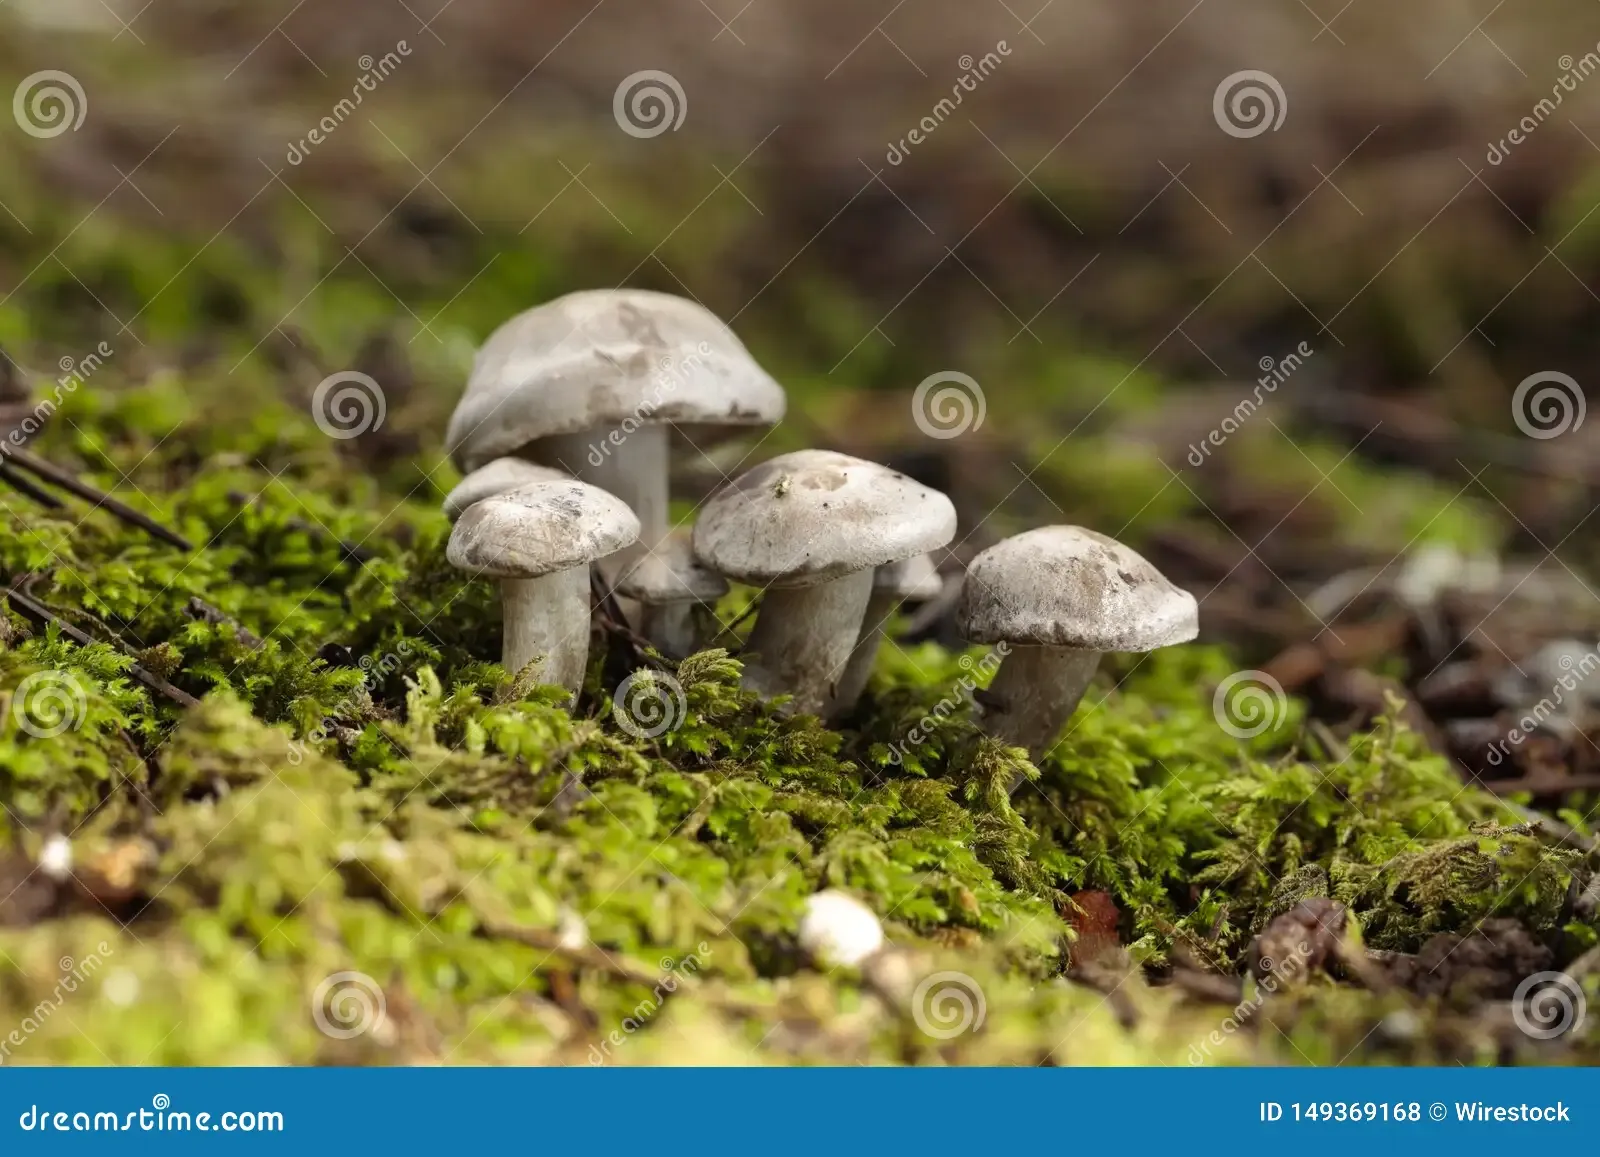 tuft-atractosporocybe-inornata-fungus-growing-moss-pine-needle-litter-autumn-buskett-malta-mediterranean-149369168.jpg